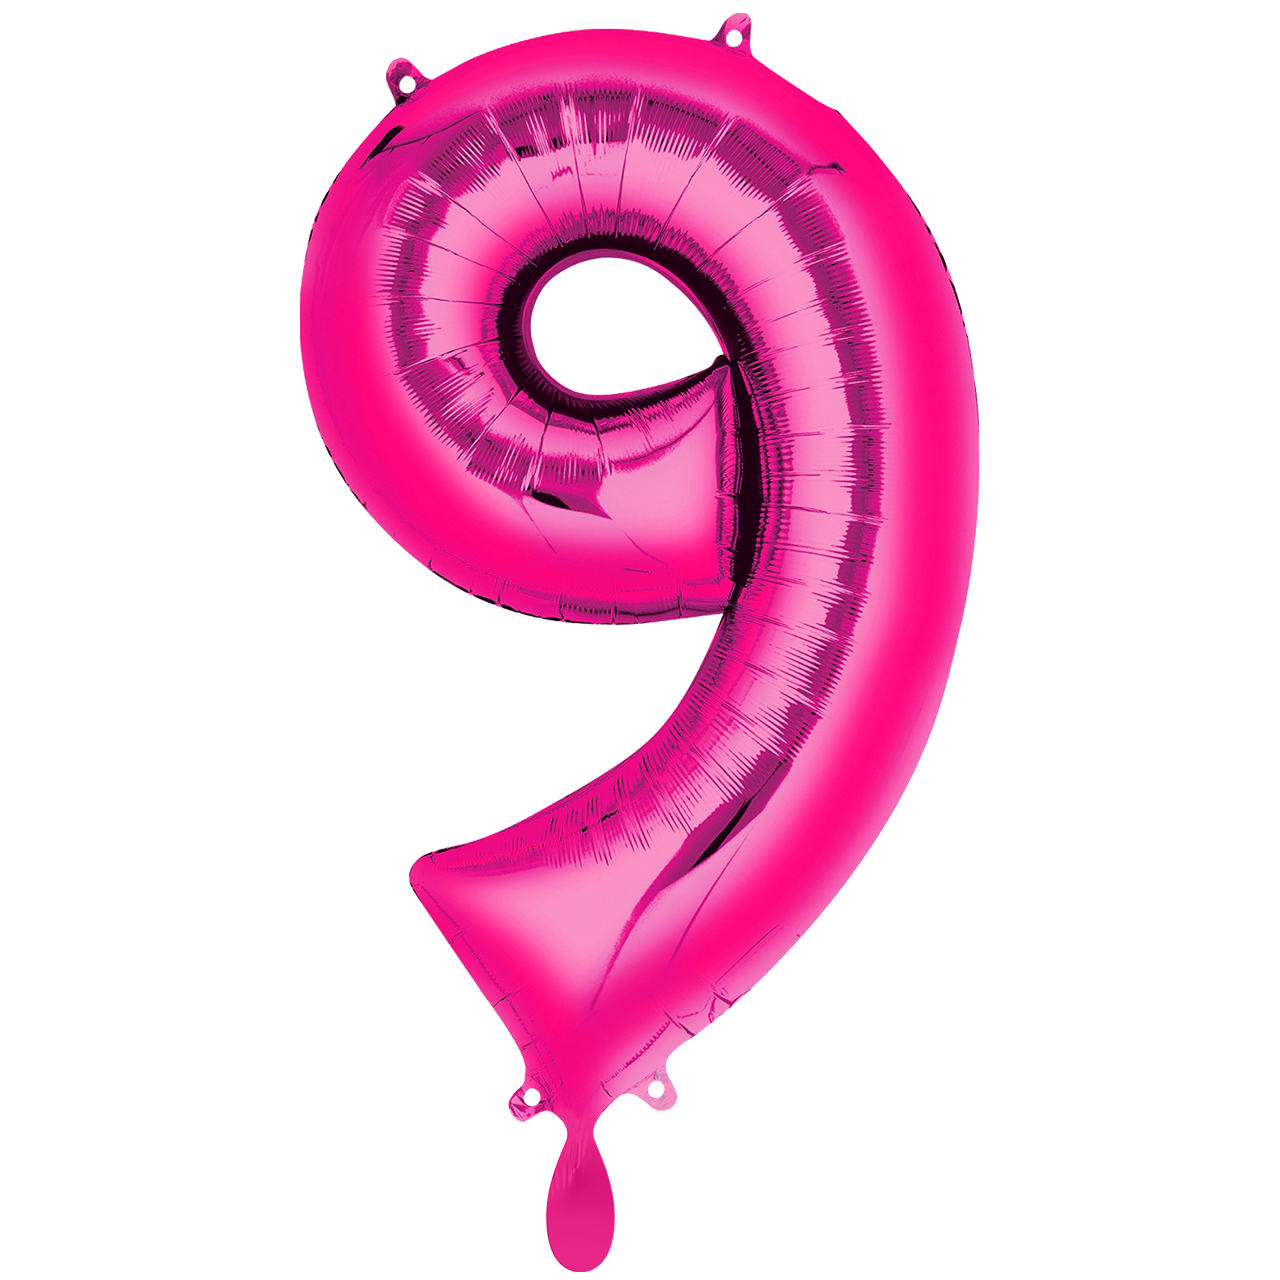 Vorschau: 1 Ballon XXL - Zahl 9 - Pink